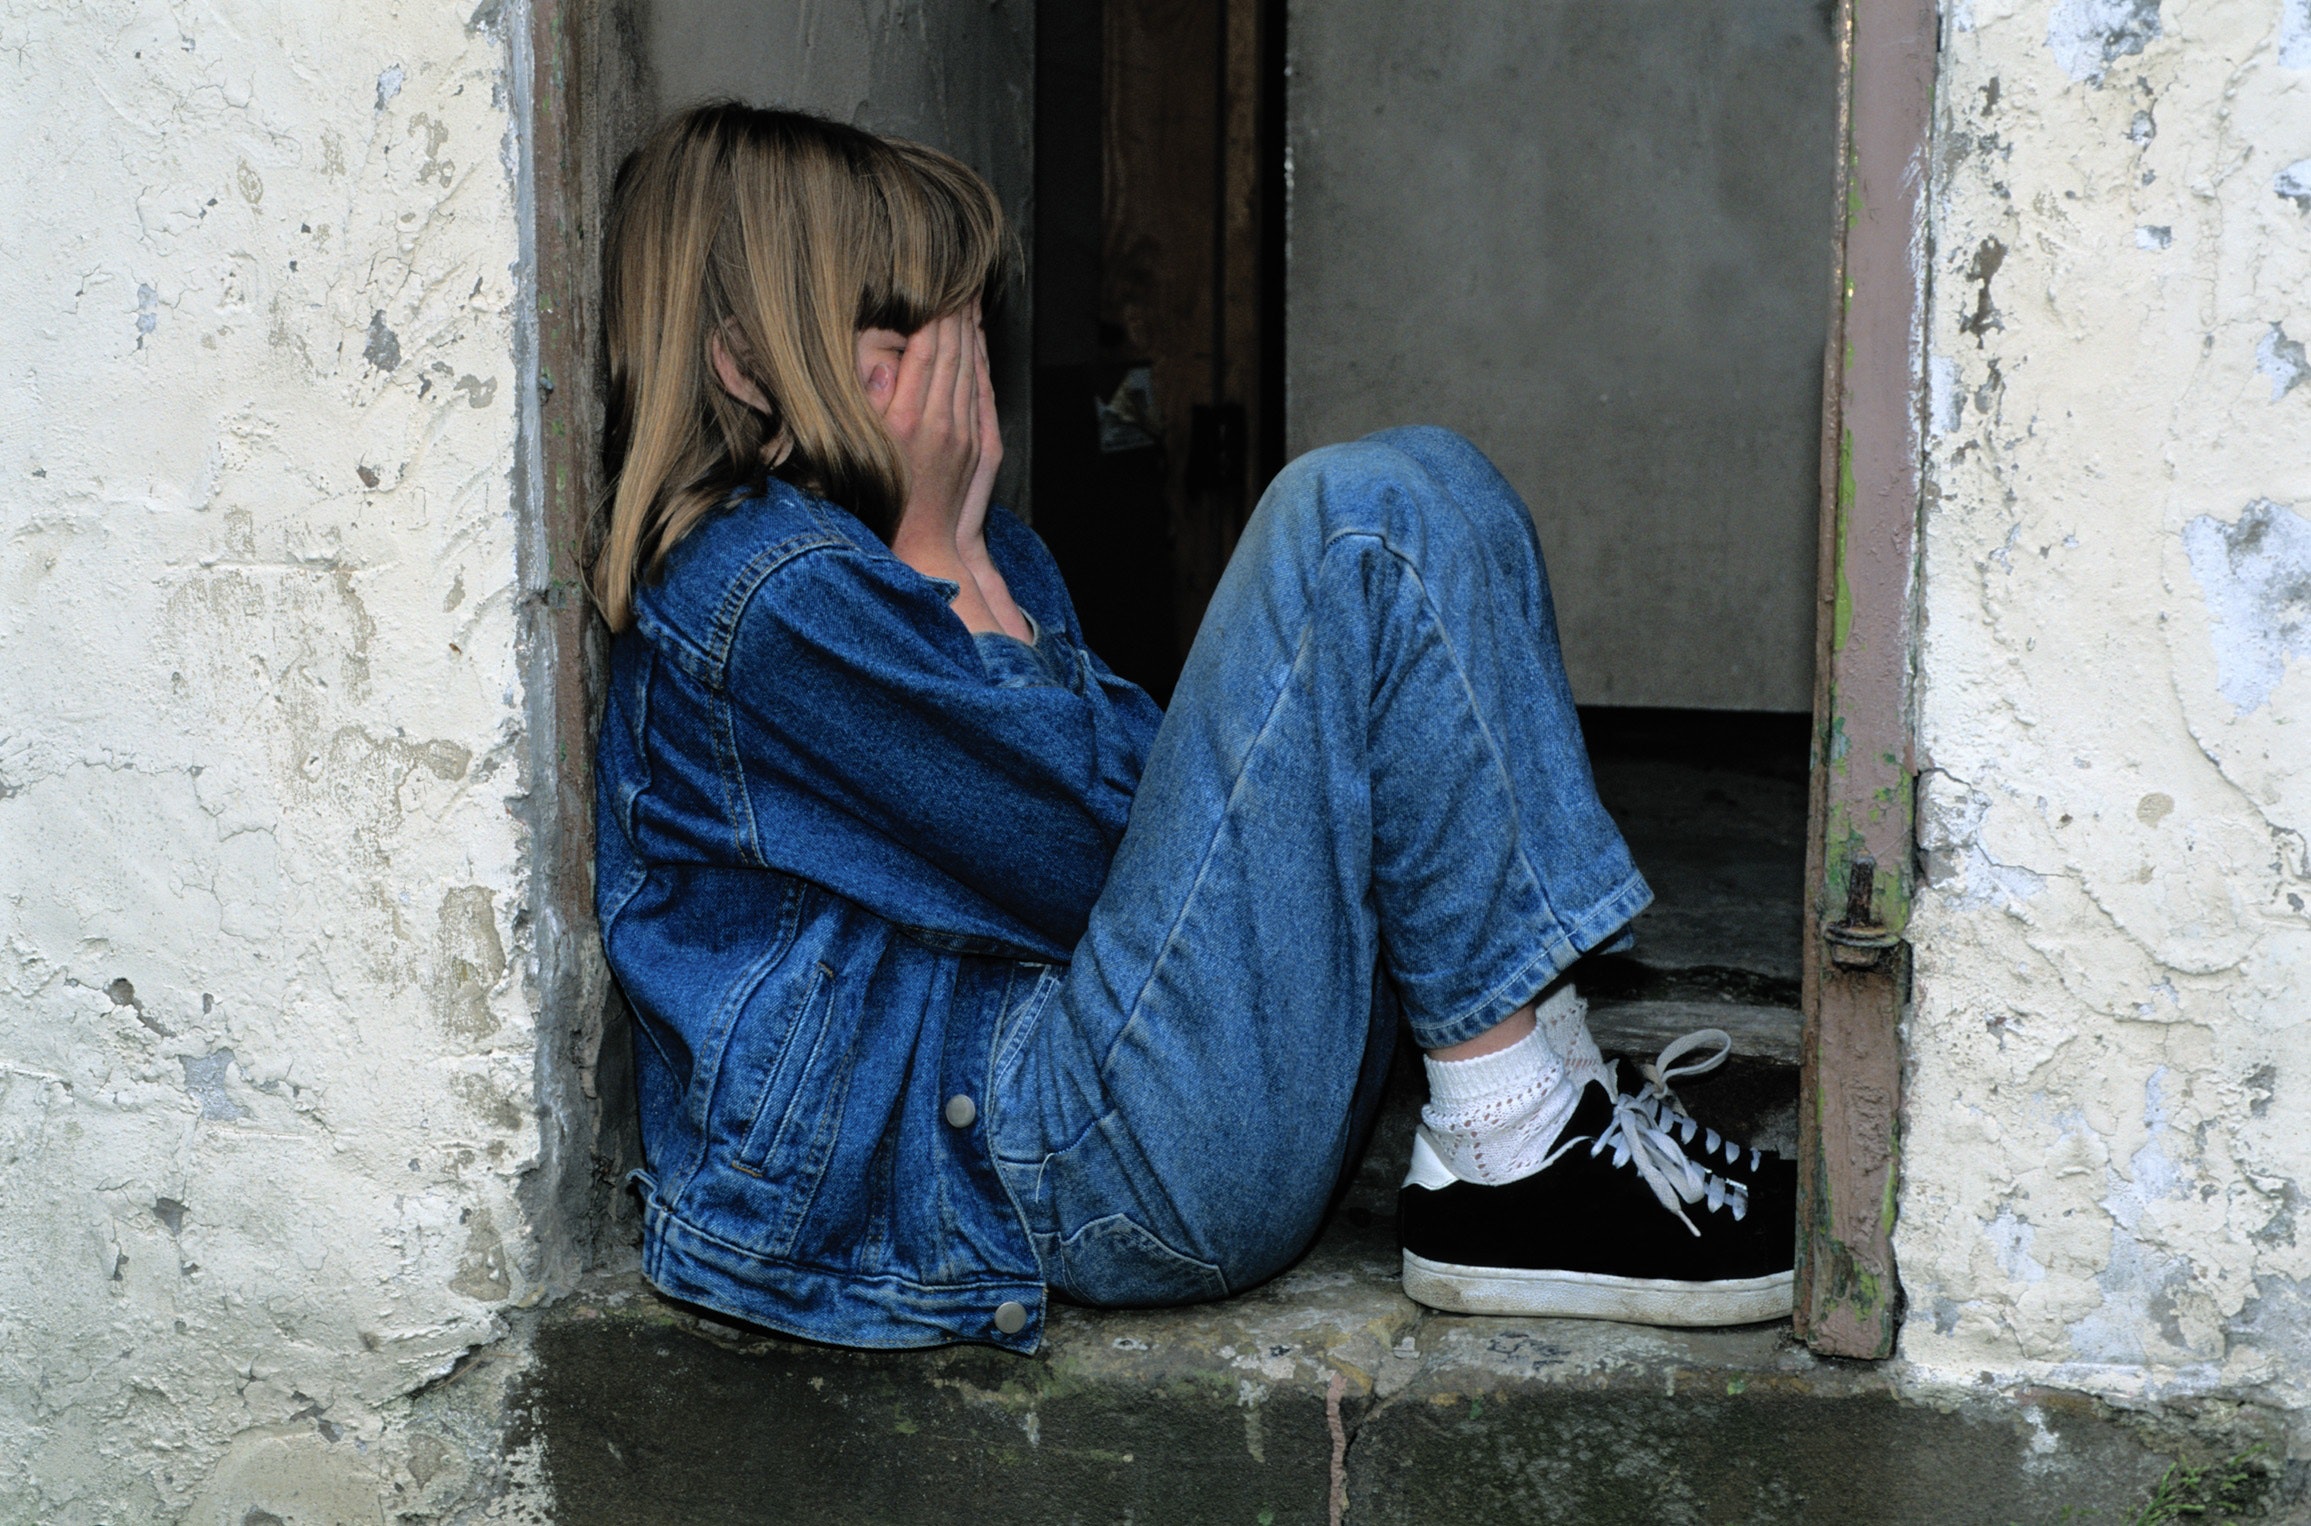 MEDIA RELEASE – Child Maltreatment study shows a national shame